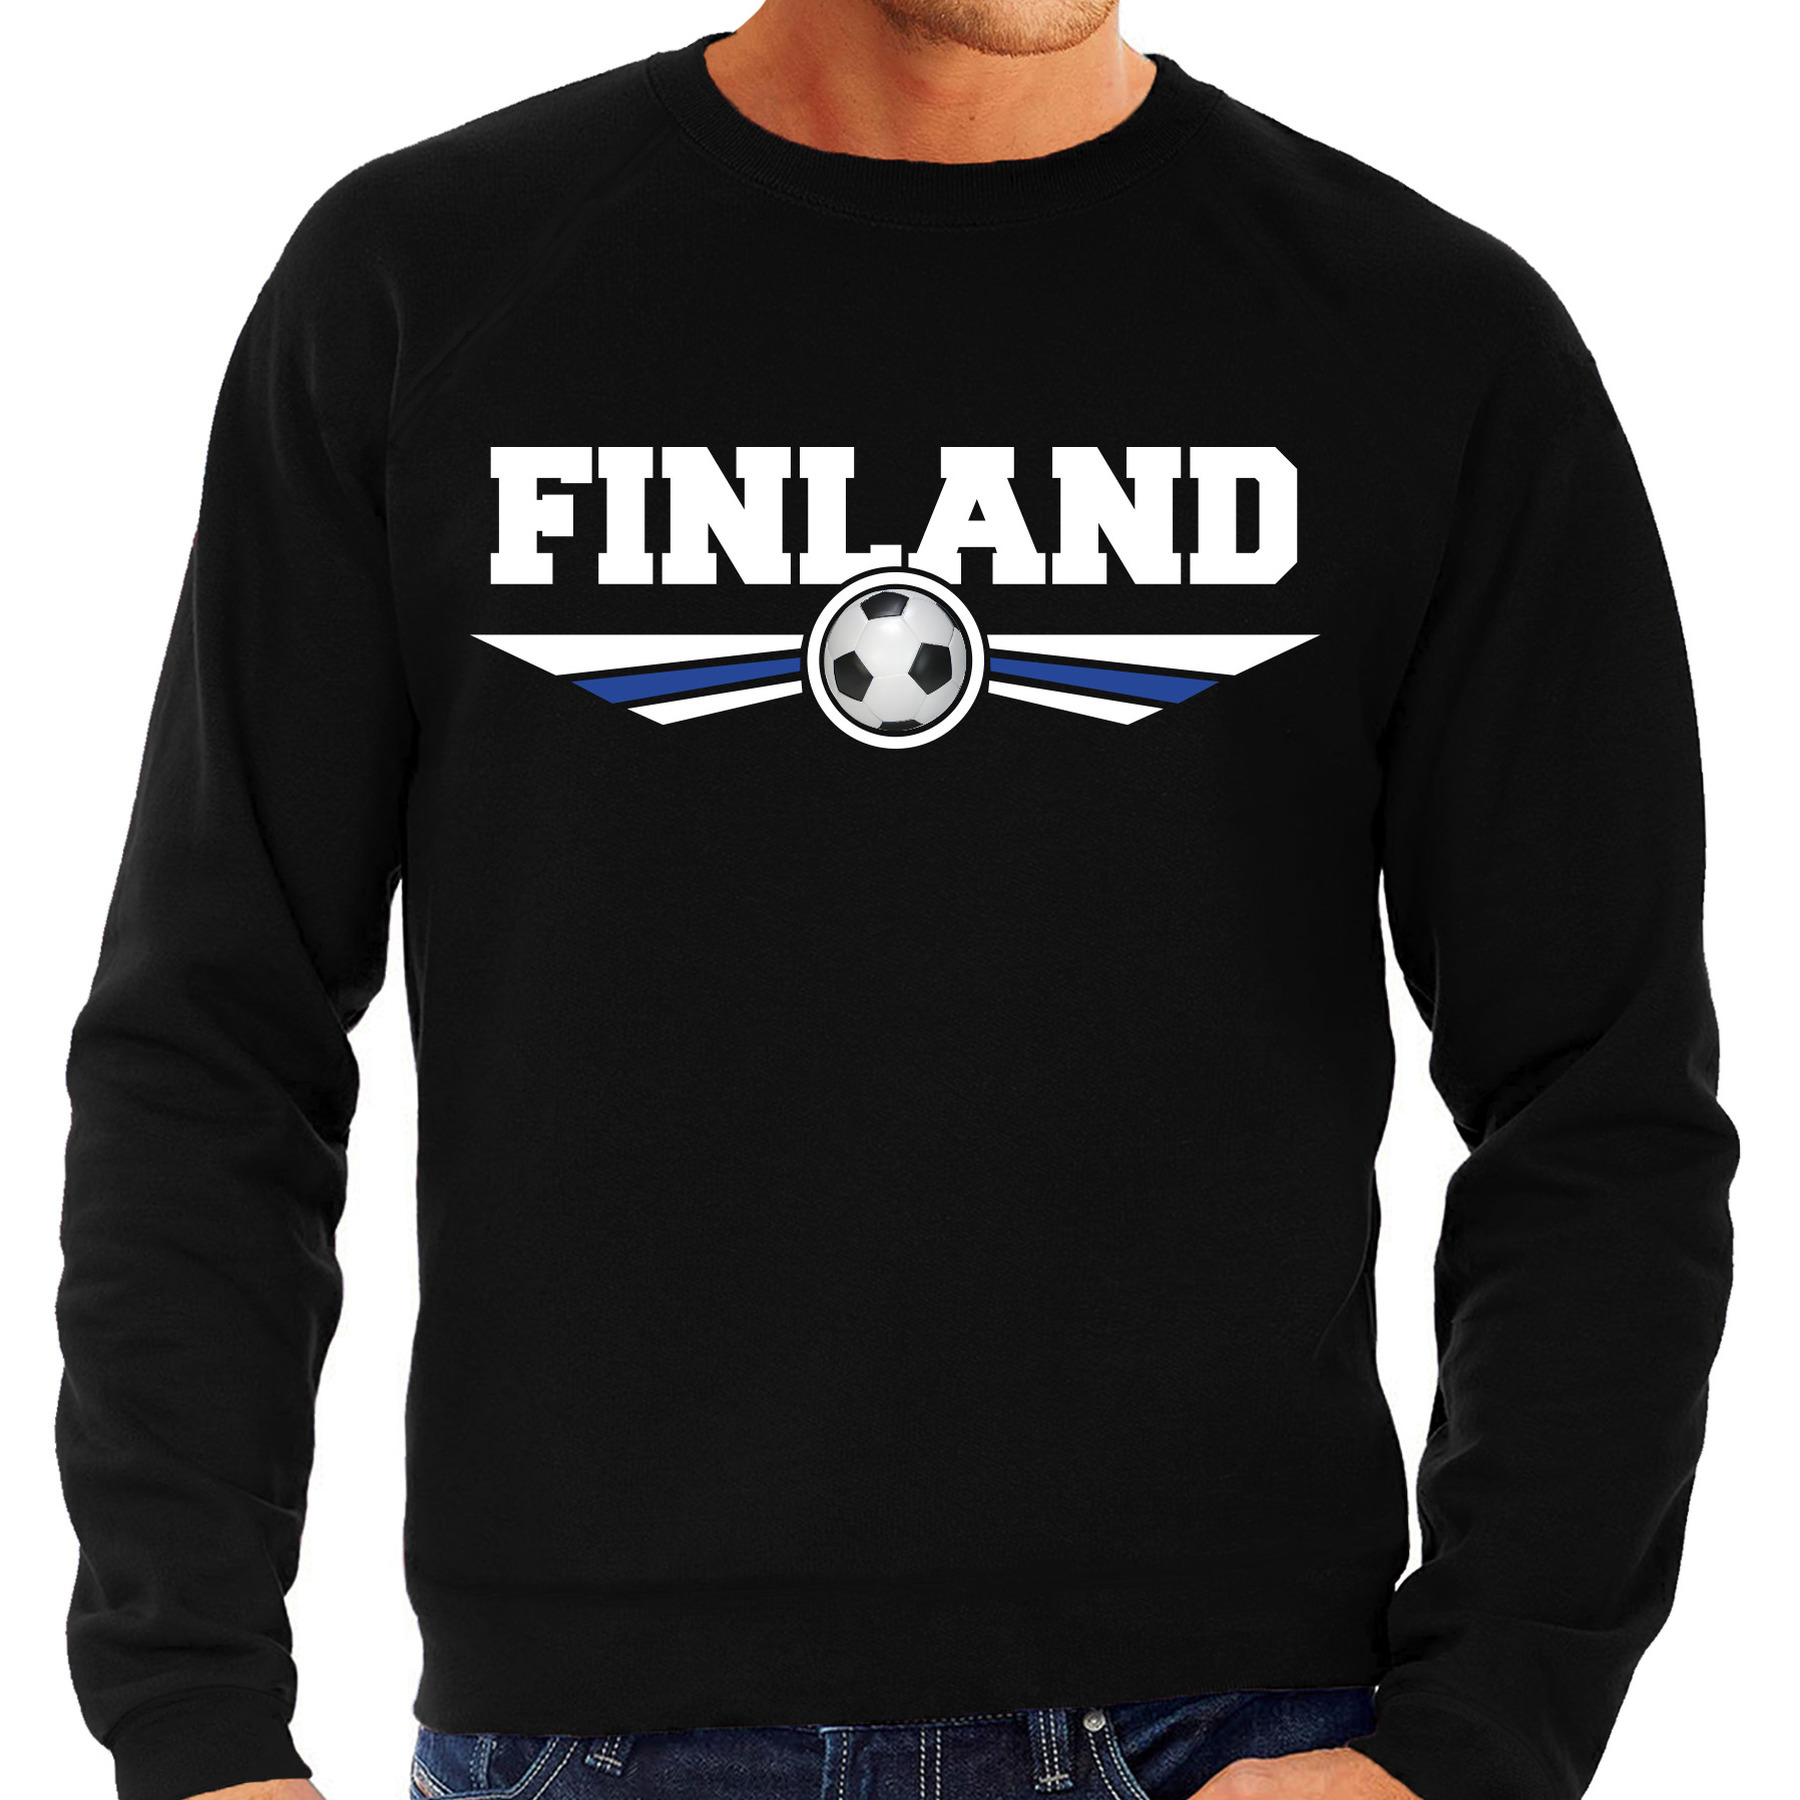 Finland landen - voetbal sweater zwart heren